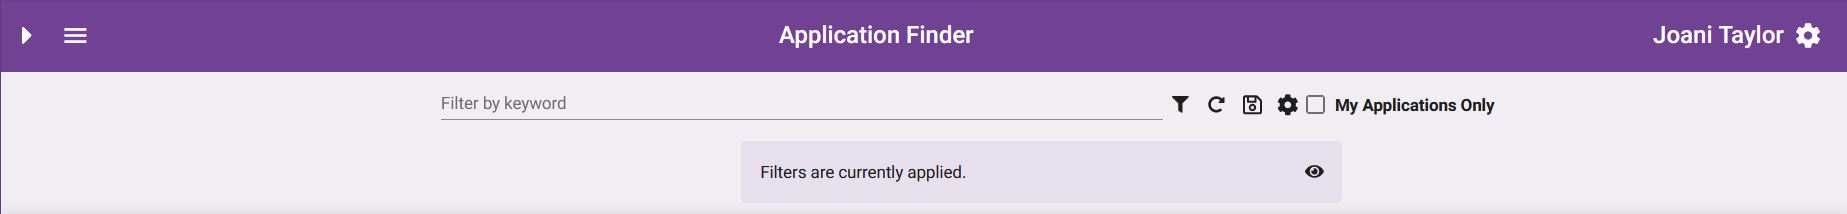 21.2_App_Finder_filters_applied.JPG